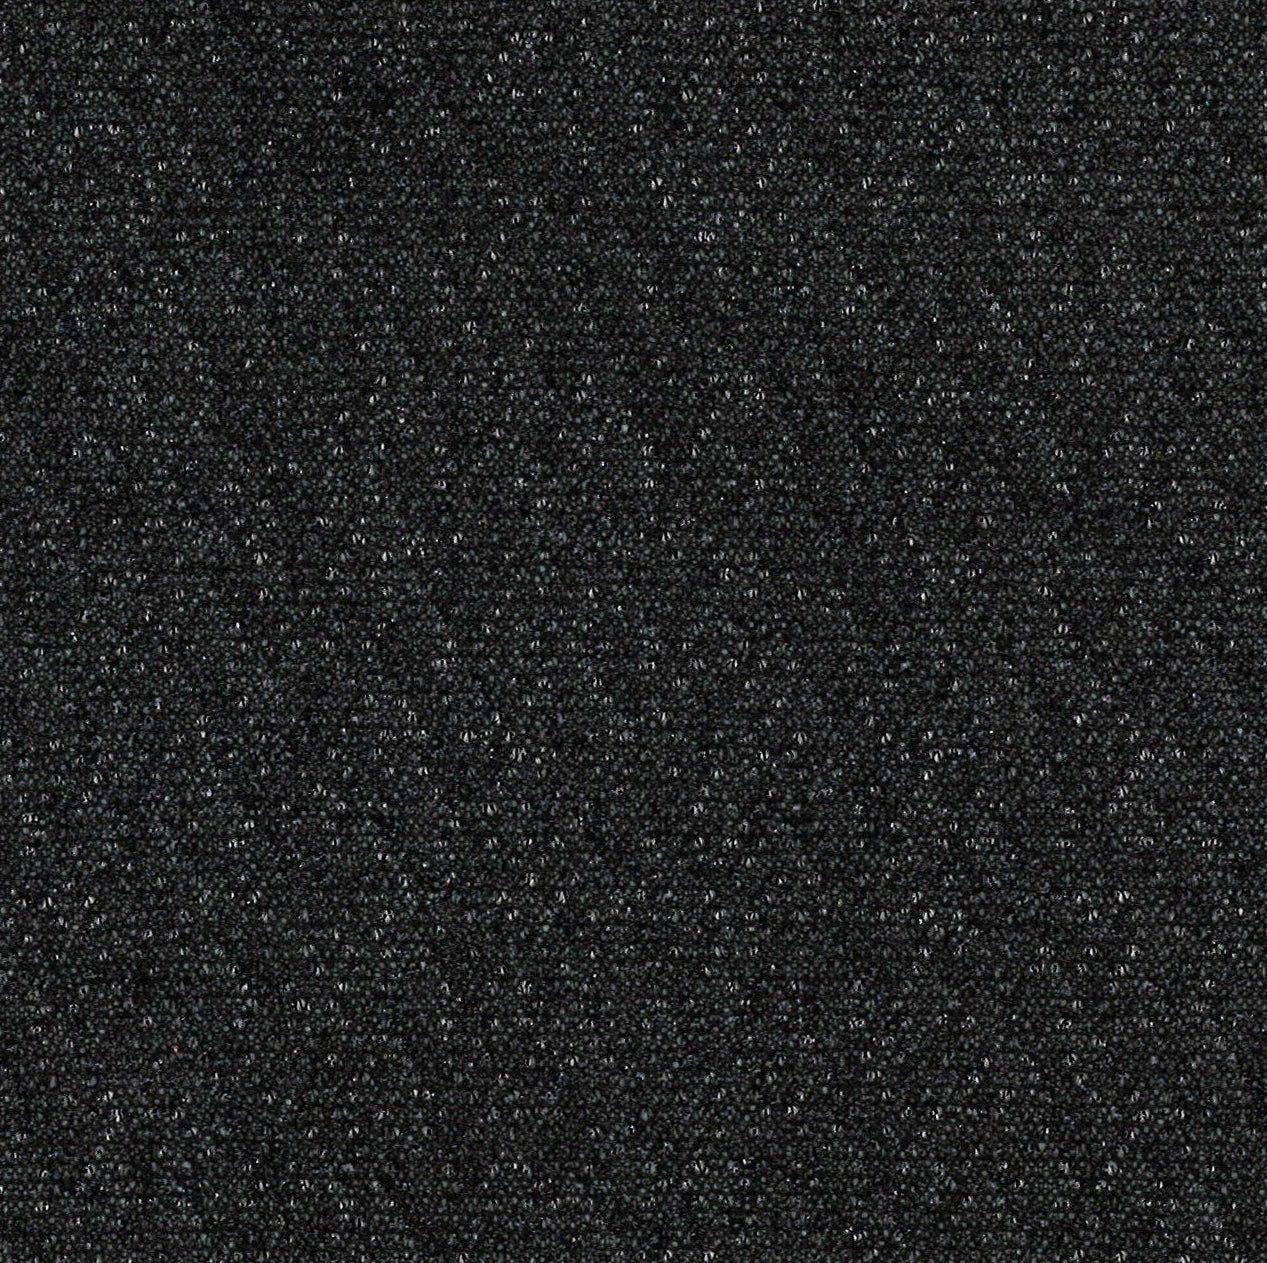 18010-07 Black Metallic Plain Dyed Blend black blend knit metallic plain dyed polyester Metallic, Solid Color - knit fabric - woven fabric - fabric company - fabric wholesale - fabric b2b - fabric factory - high quality fabric - hong kong fabric - fabric hk - acetate fabric - cotton fabric - linen fabric - metallic fabric - nylon fabric - polyester fabric - spandex fabric - chun wing hing - cwh hk - fabric worldwide ship - 針織布 - 梳織布 - 布料公司- 布料批發 - 香港布料 - 秦榮興